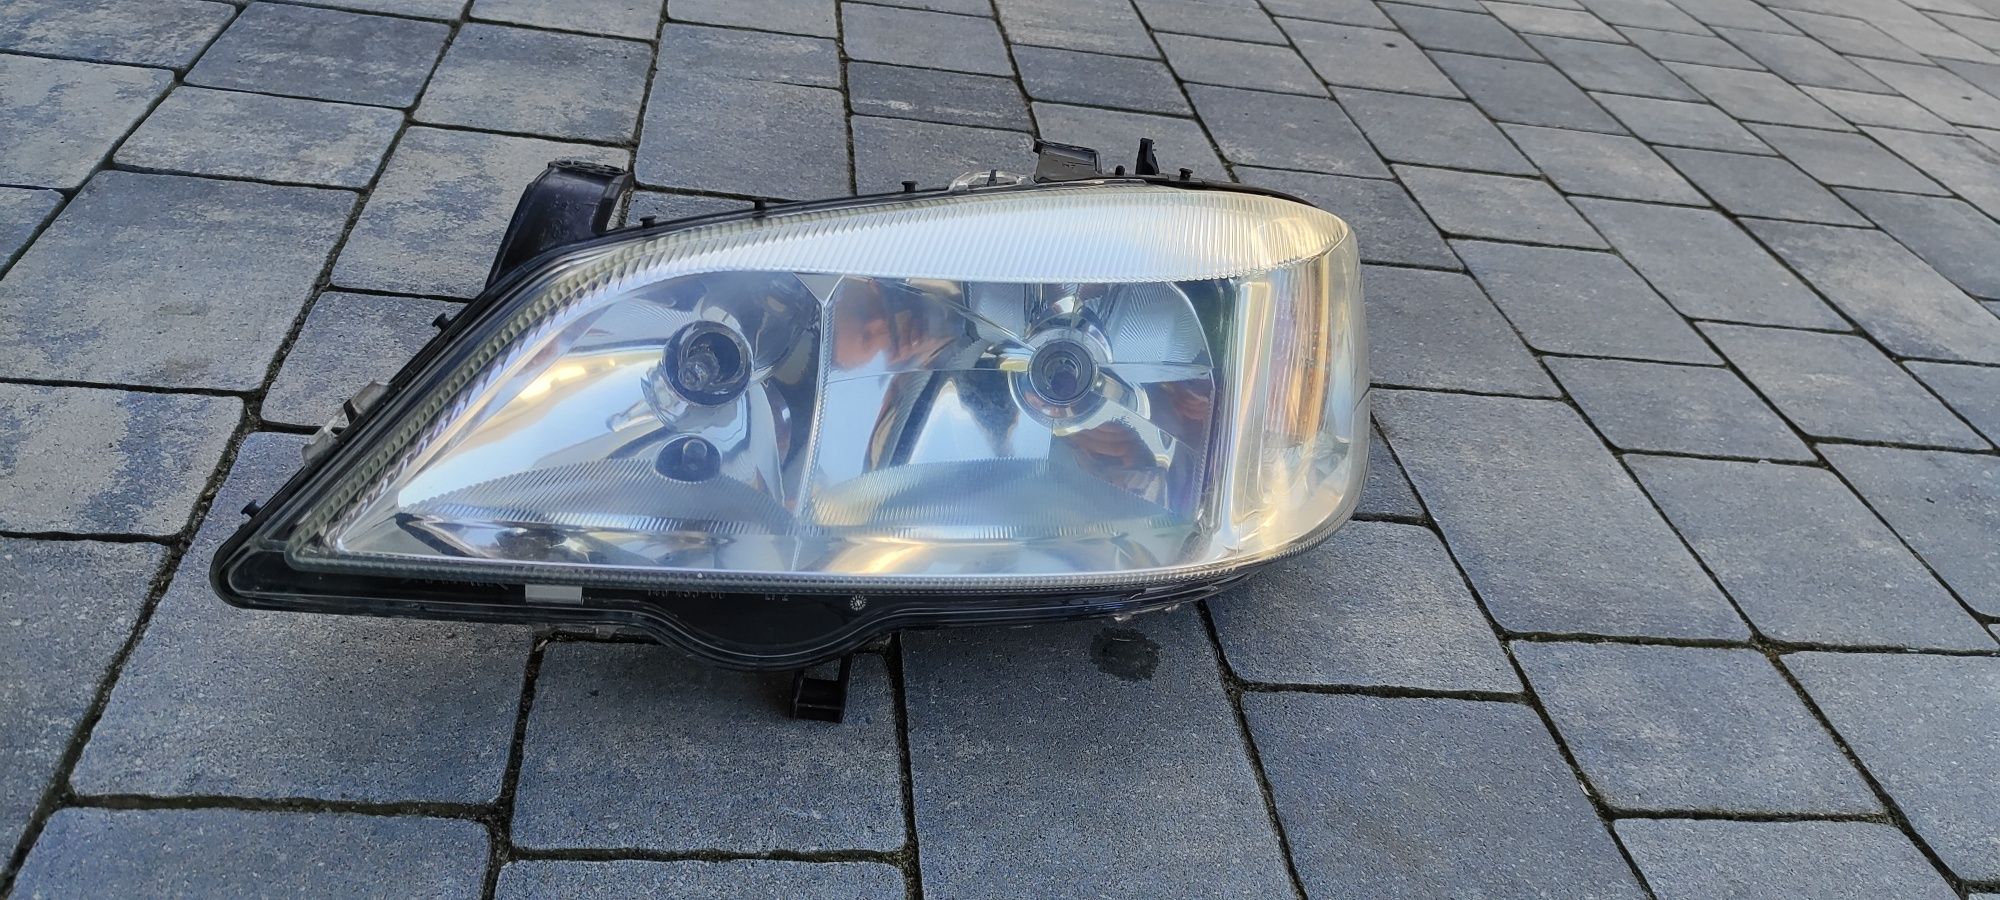 Lampa lewa przednia przód Opel Astra II G Hella Europa